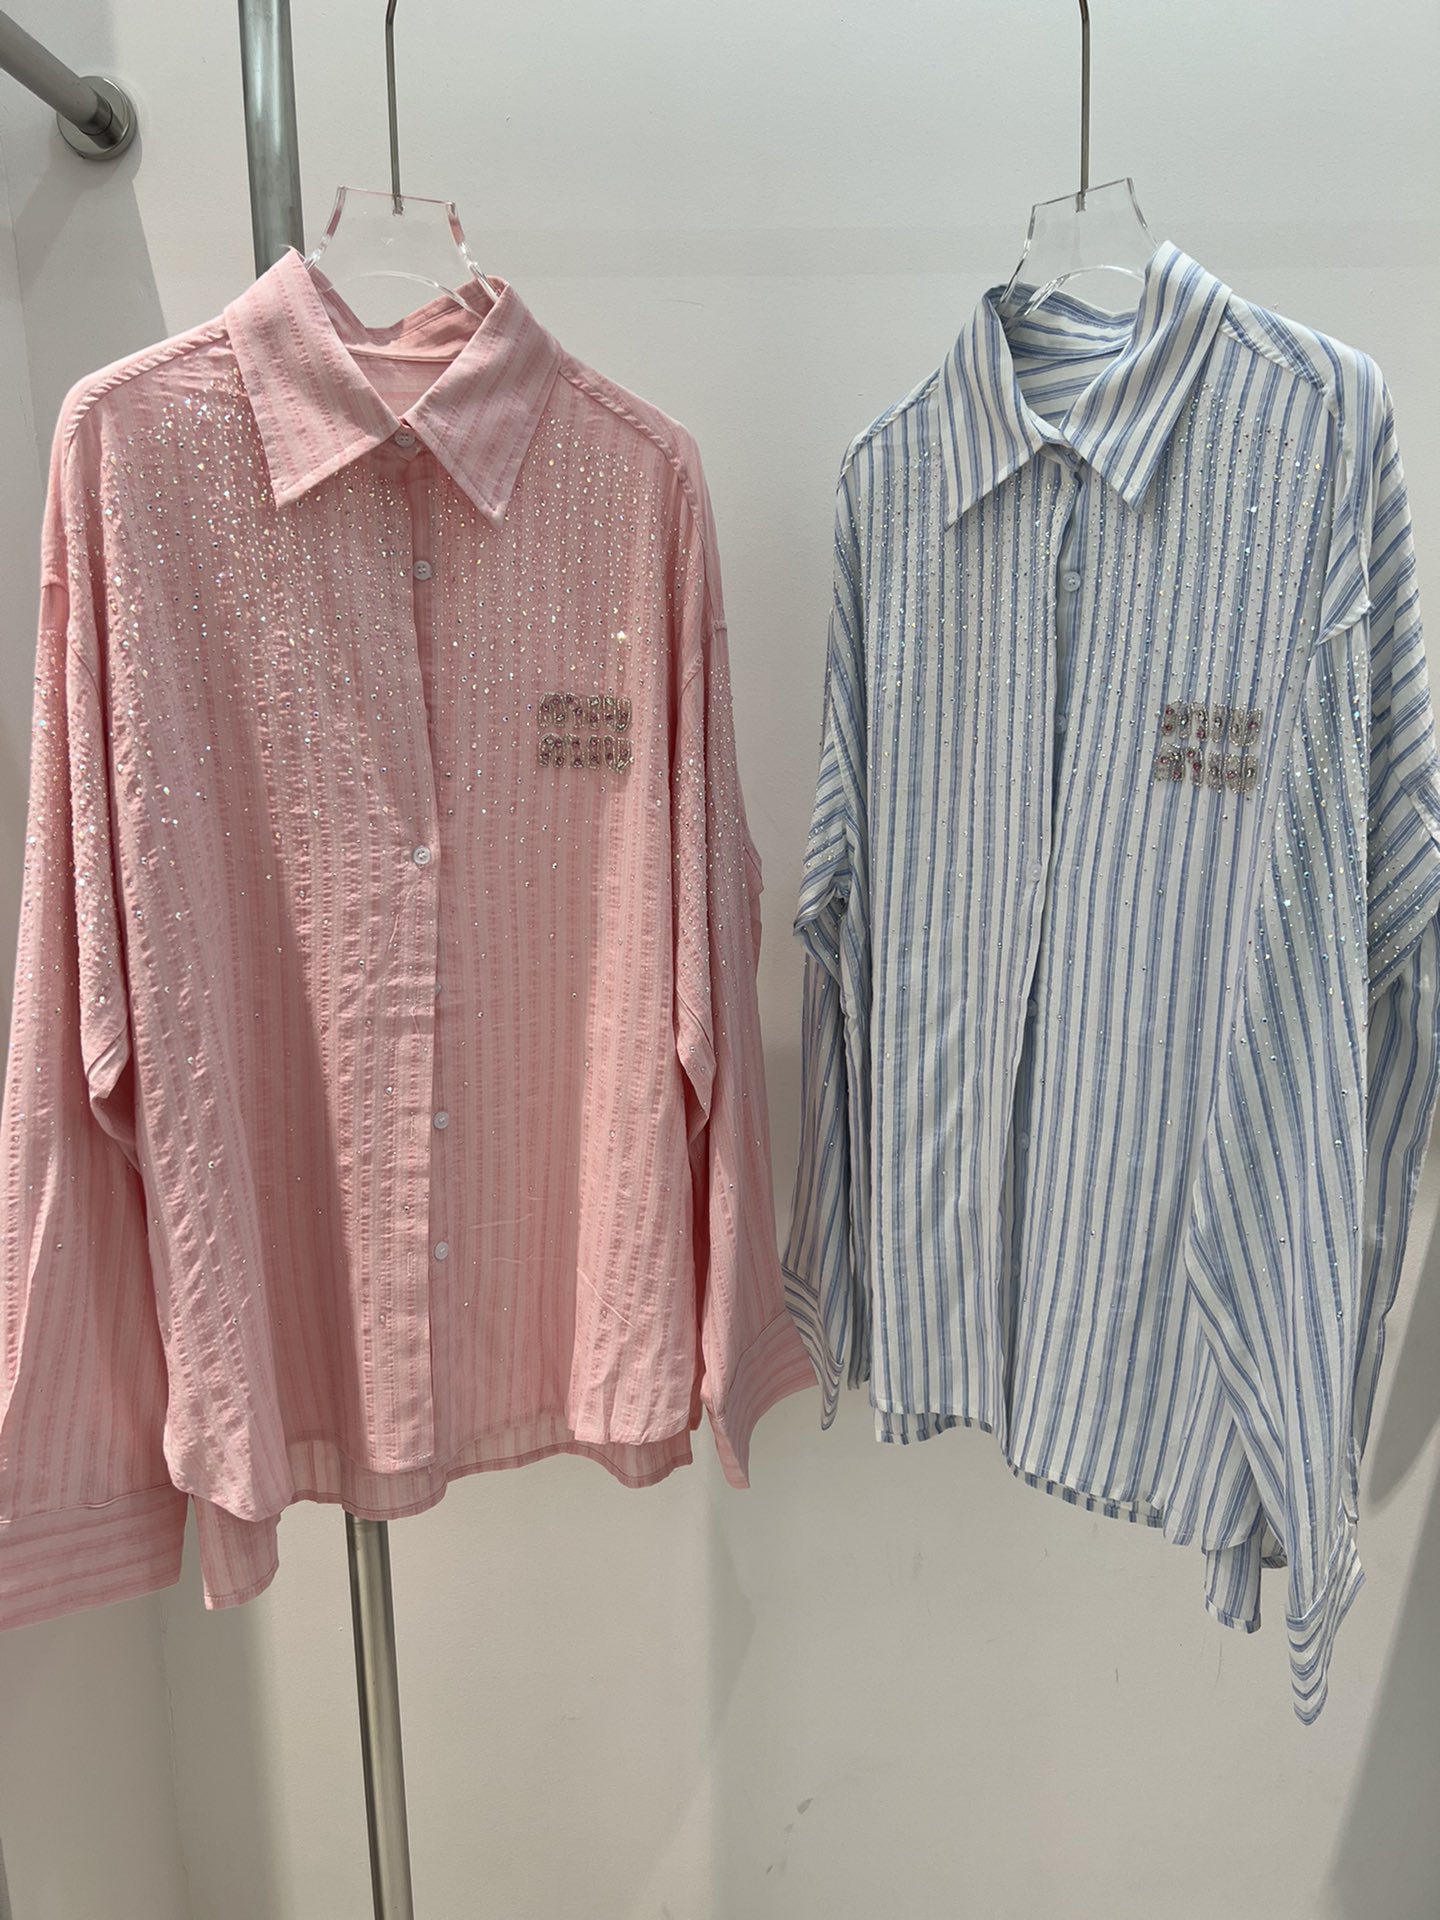 MiuMiu Clothing Coats & Jackets Shirts & Blouses Blue Pink Fall Collection P180238888